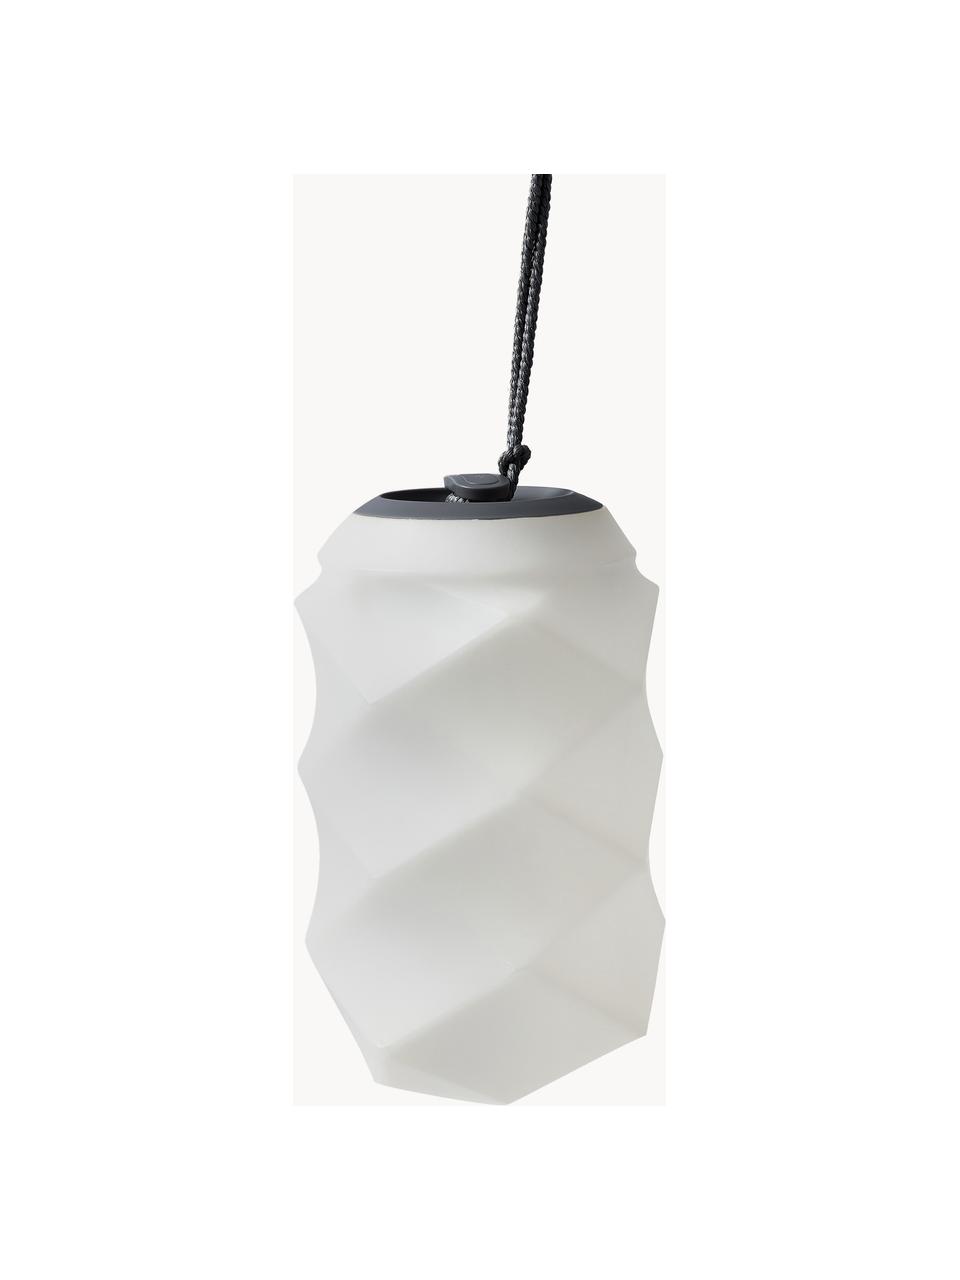 Mobiele dimbare LED hanglamp Bita met kleurverandering en afstandsbediening, Lamp: polyethyleen, Wit, donkergrijs, Ø 18 x H 30 cm